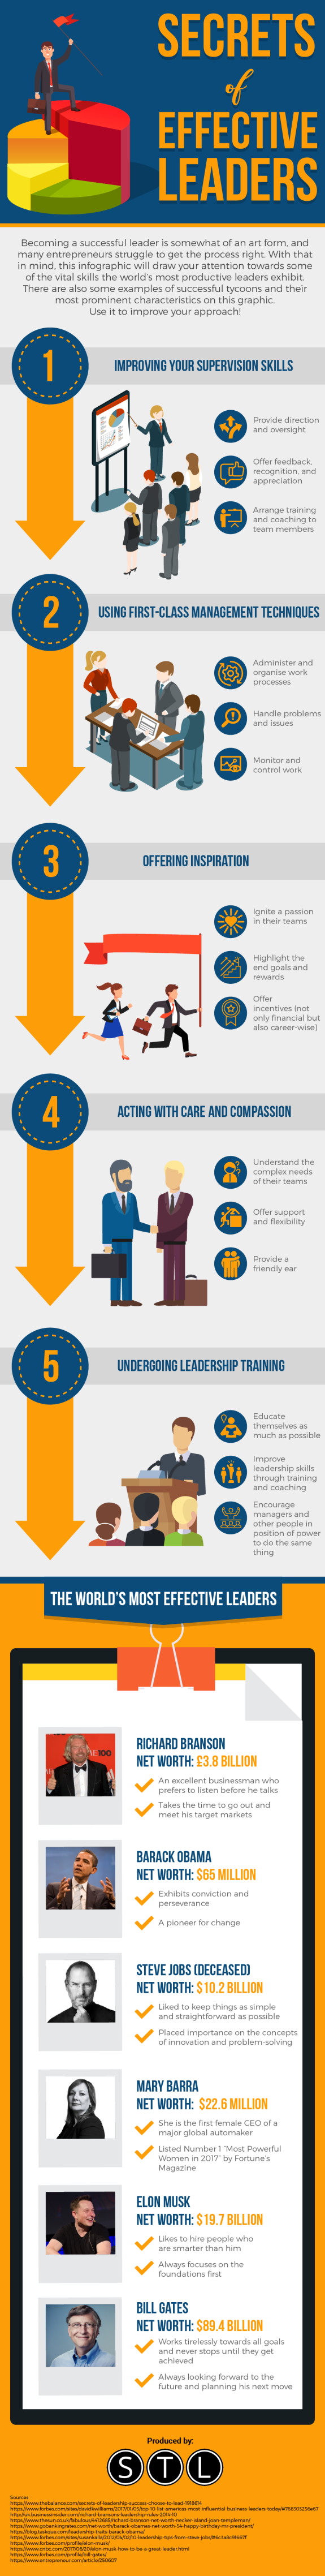 Secrets of Effective Leaders